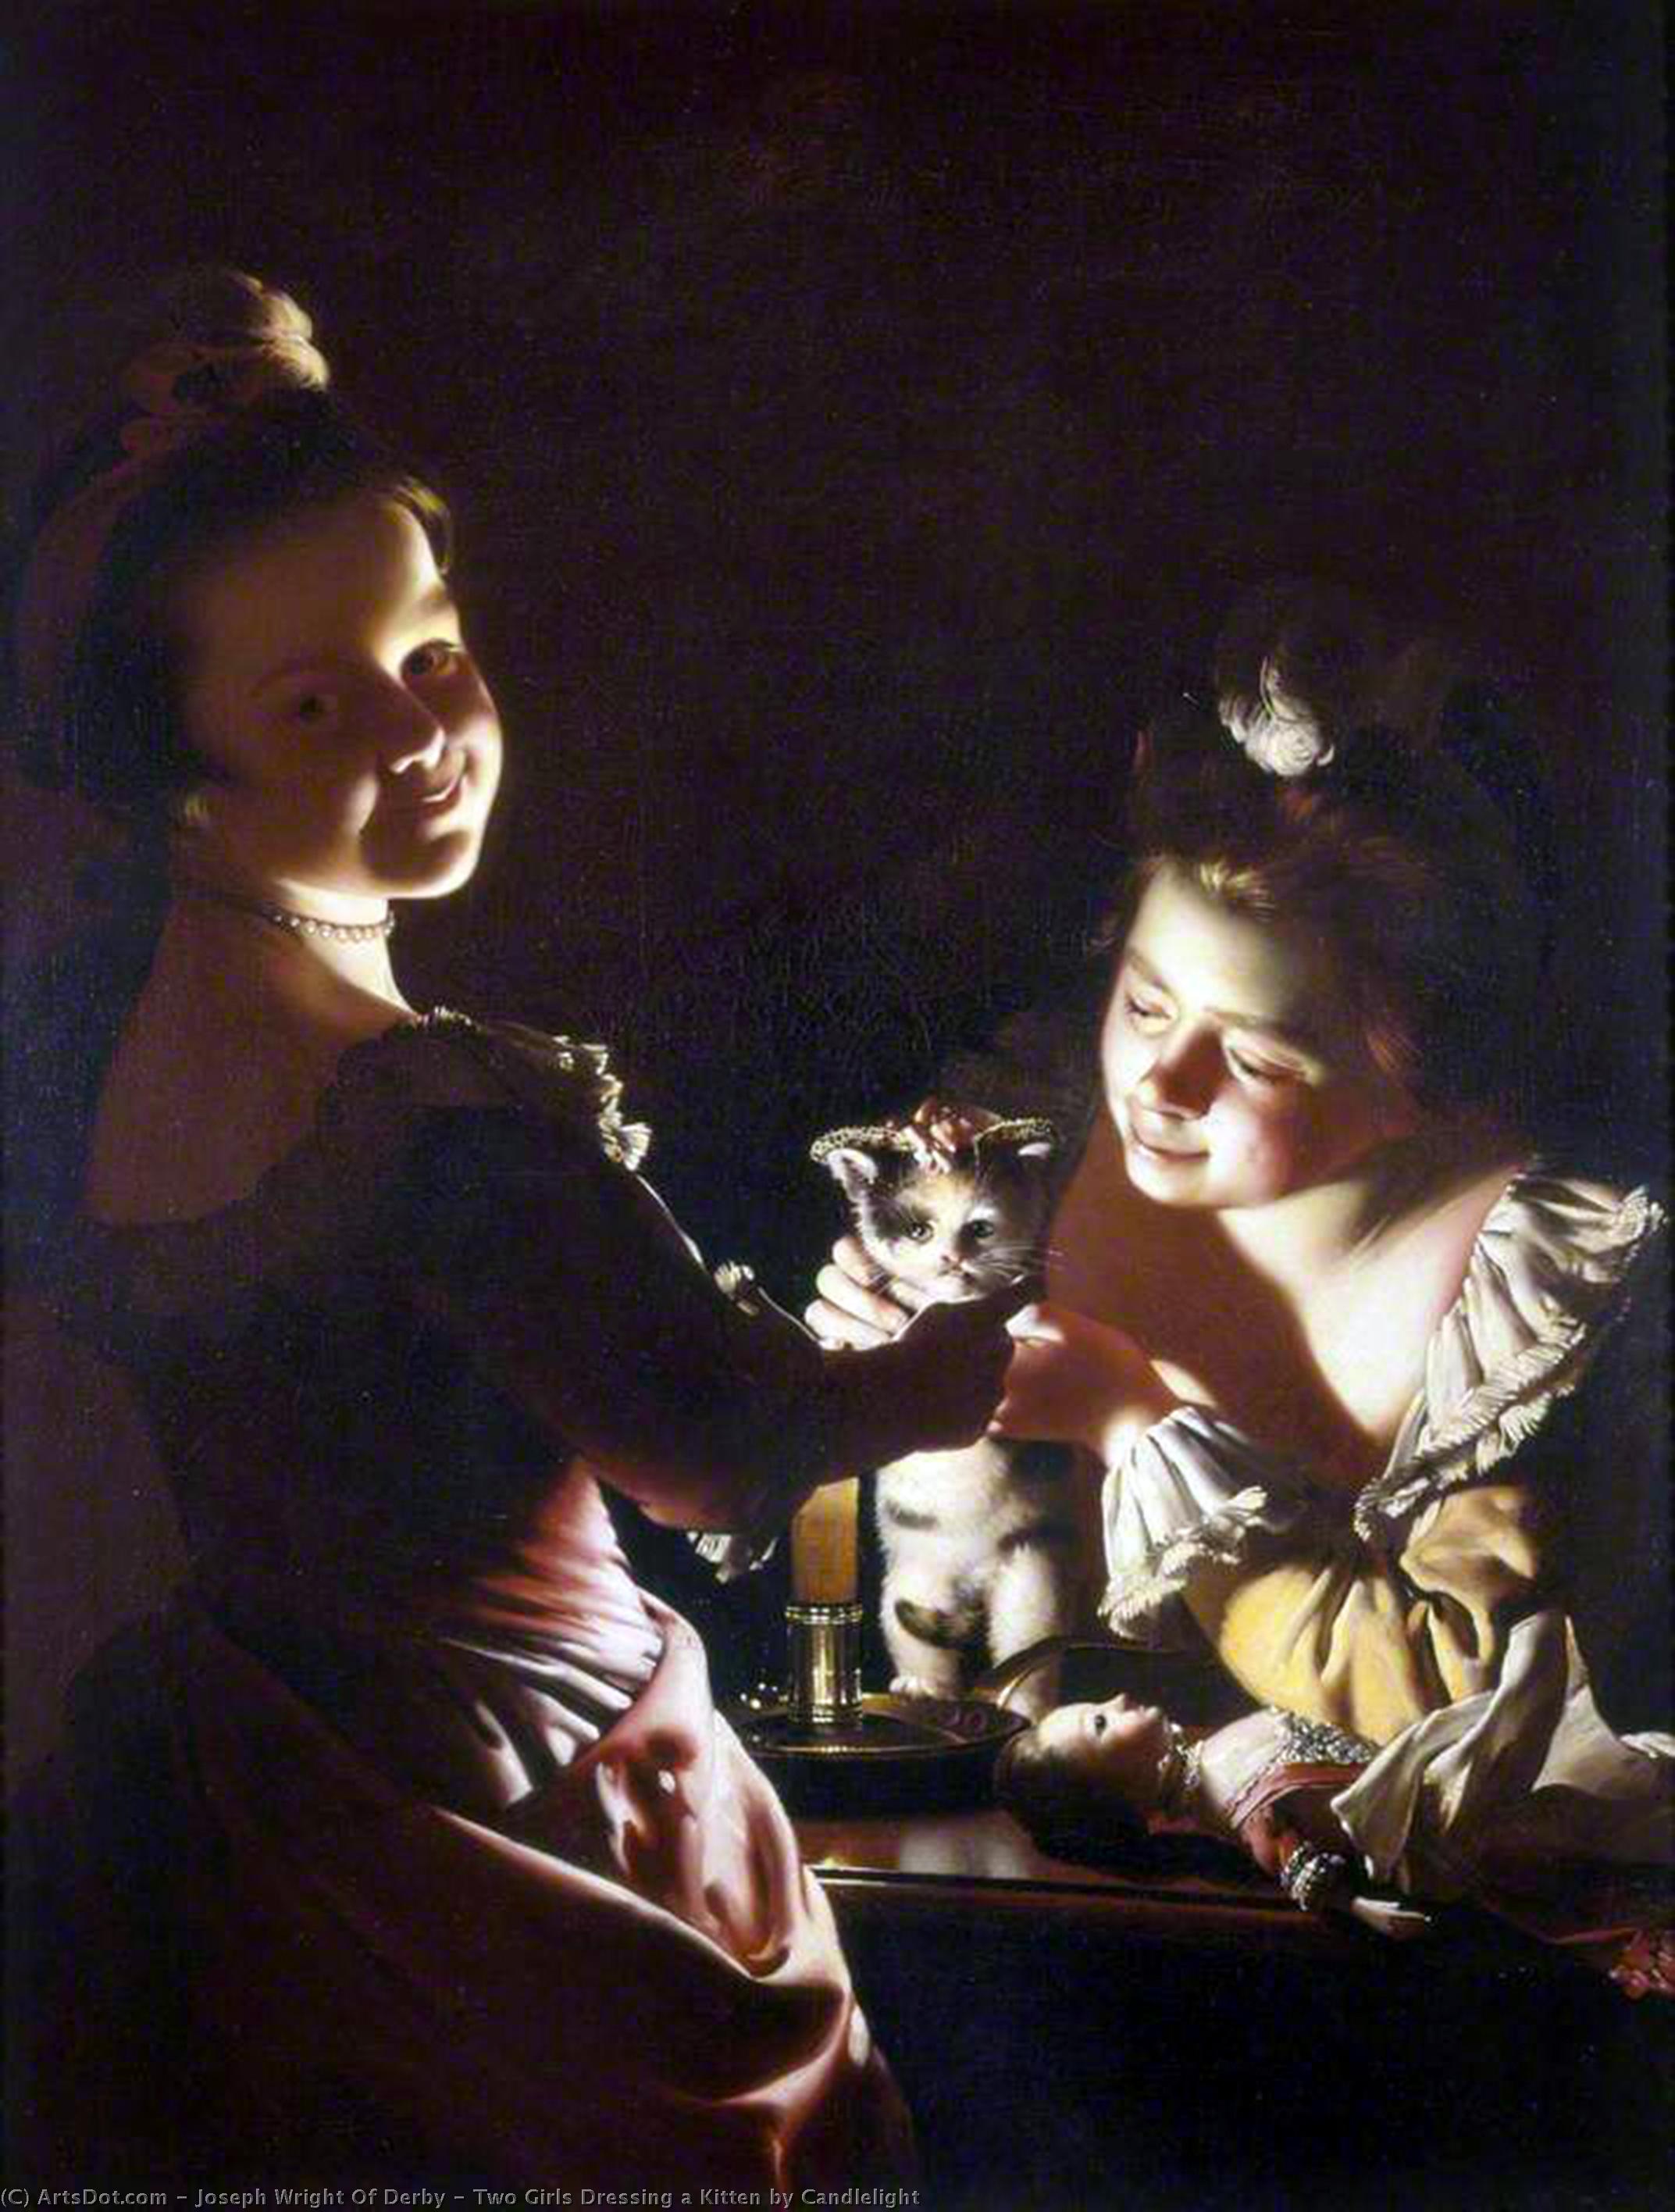 Wikoo.org - موسوعة الفنون الجميلة - اللوحة، العمل الفني Joseph Wright Of Derby - Two Girls Dressing a Kitten by Candlelight